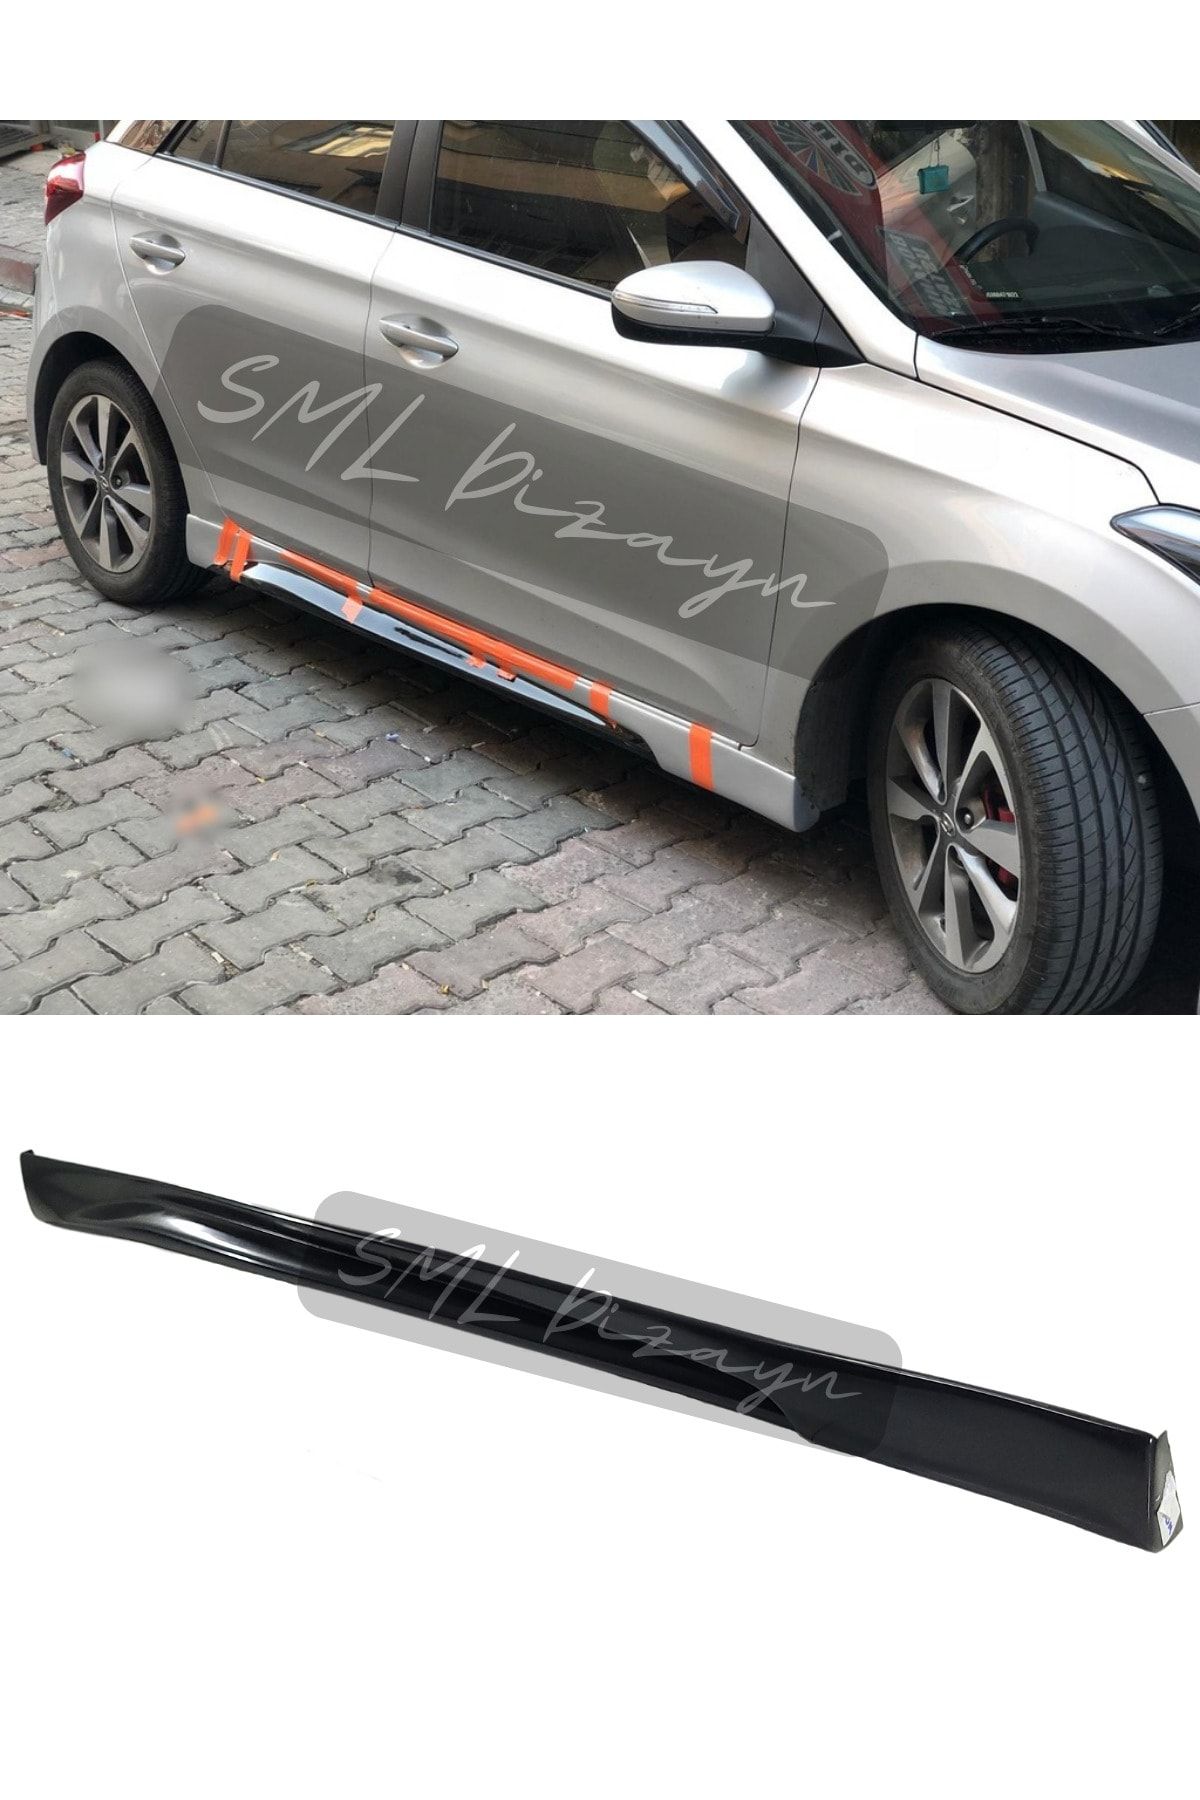 SML Dizayn Hyundai I20 (2014-2018) Custom Yan Marşpiyel (plastik) Boyasız I20 Yan-marşbiyel-marşbiel-ek